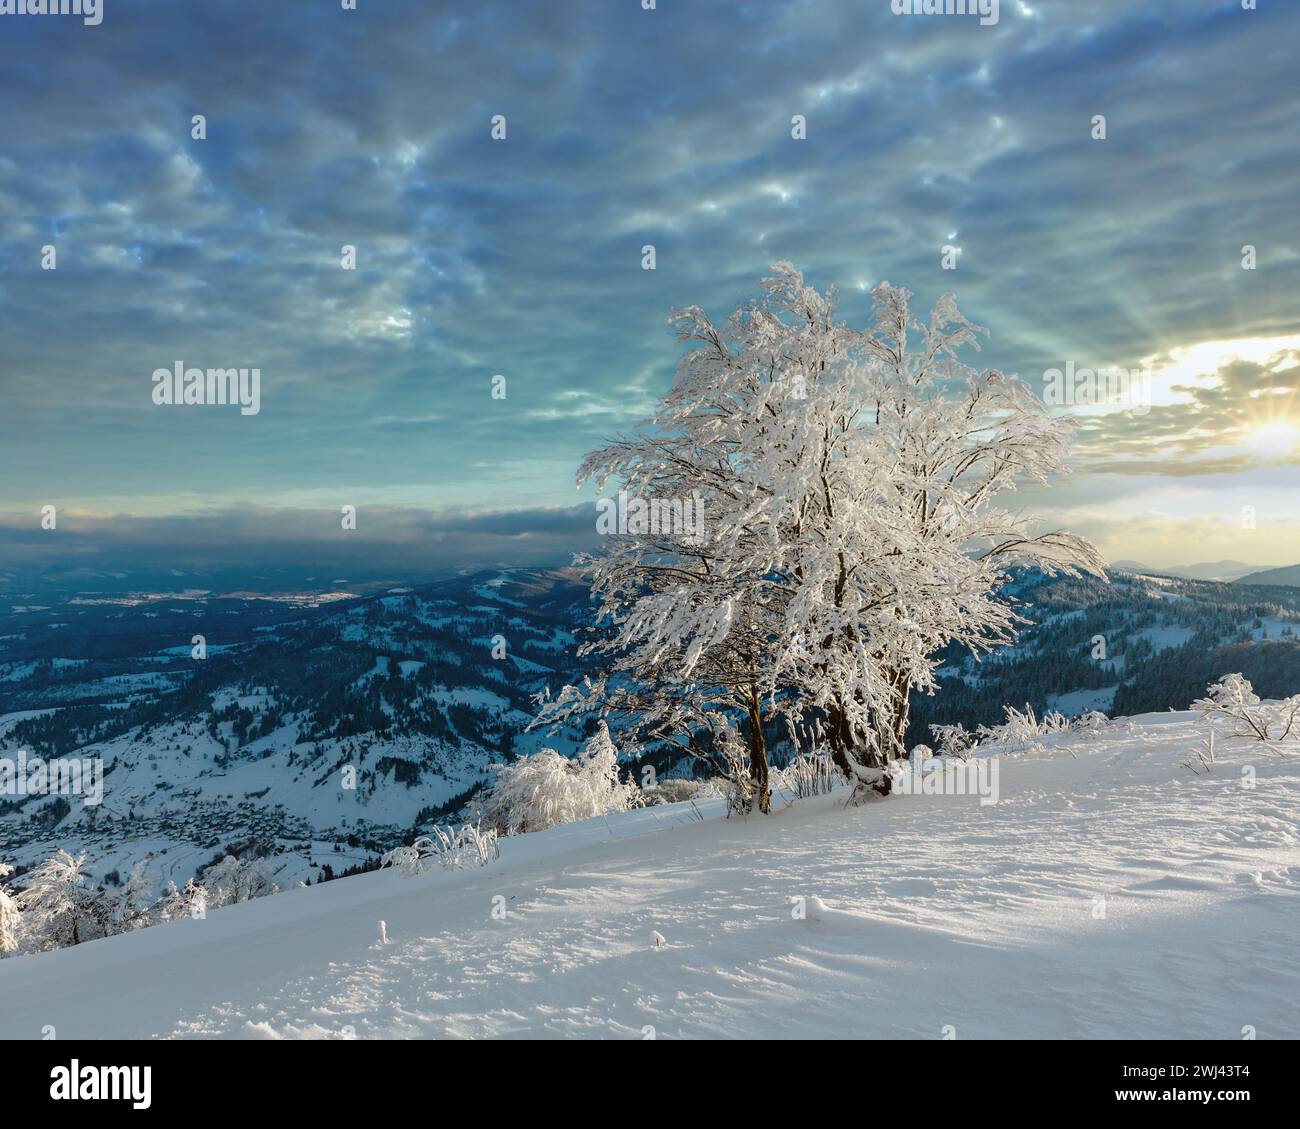 Winter mountain snowy evening landscape Stock Photo